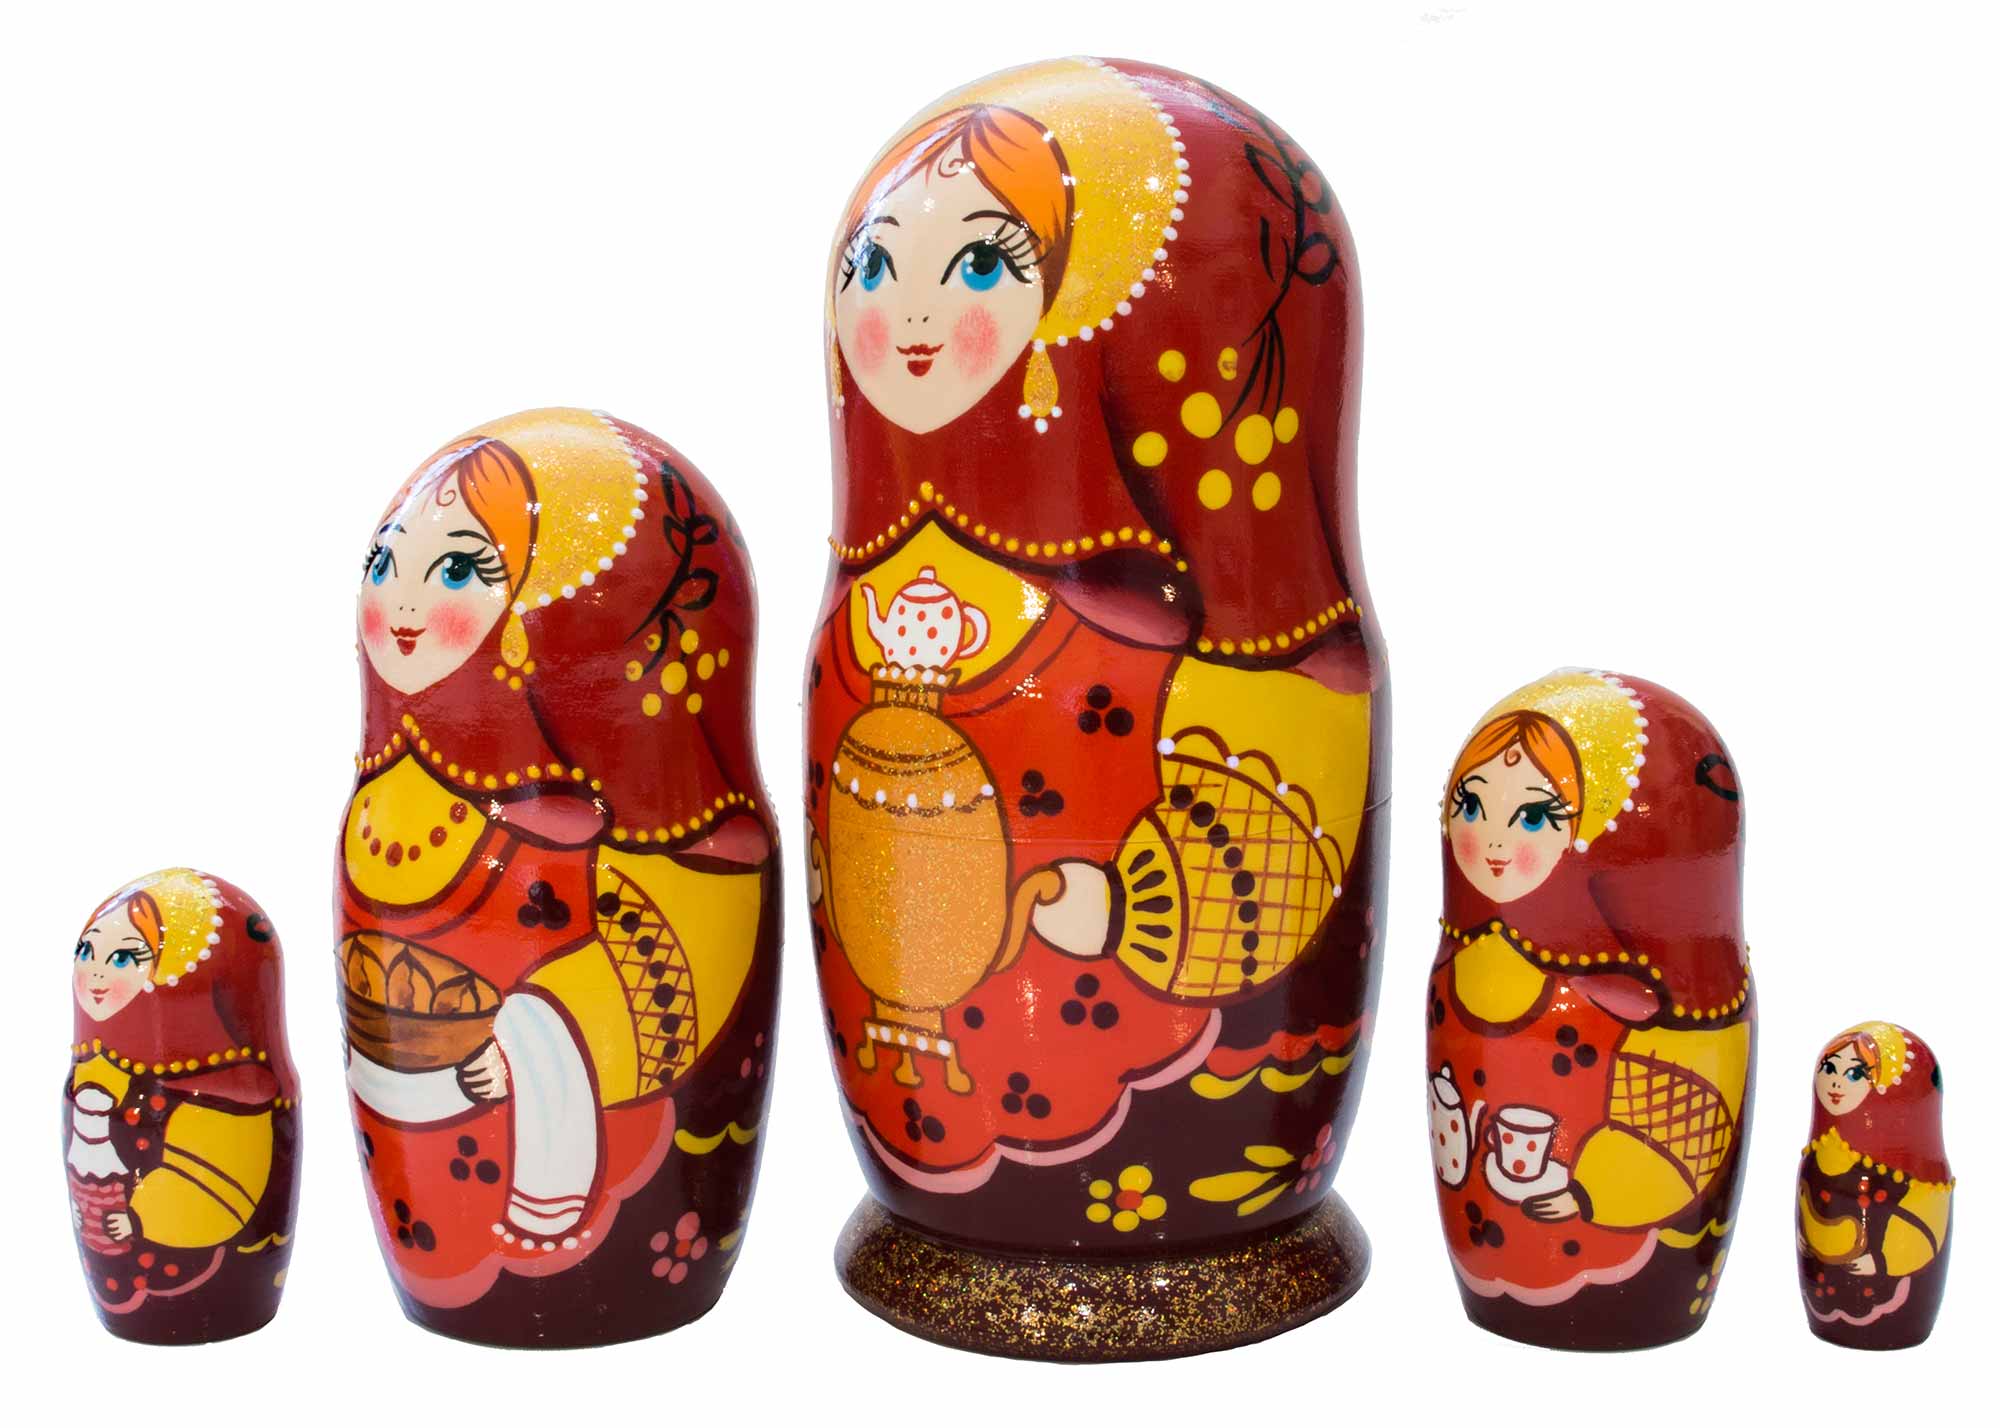 Buy Gold Samovar Classical Nesting Doll 5pc./6" at GoldenCockerel.com